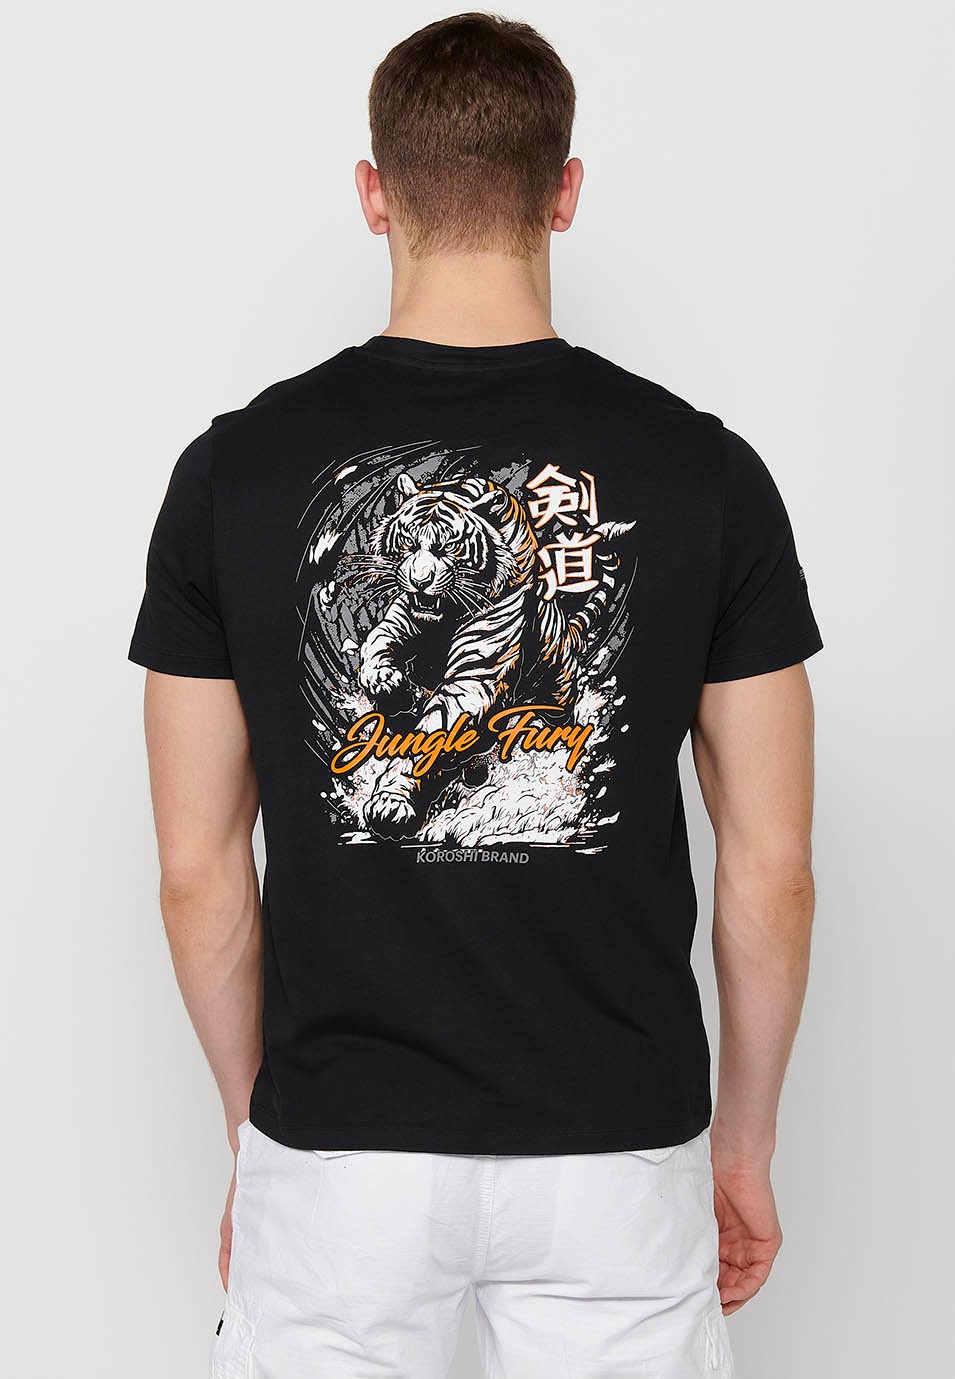 Short-sleeved cotton t-shirt with jungle tigger back print, black color for men